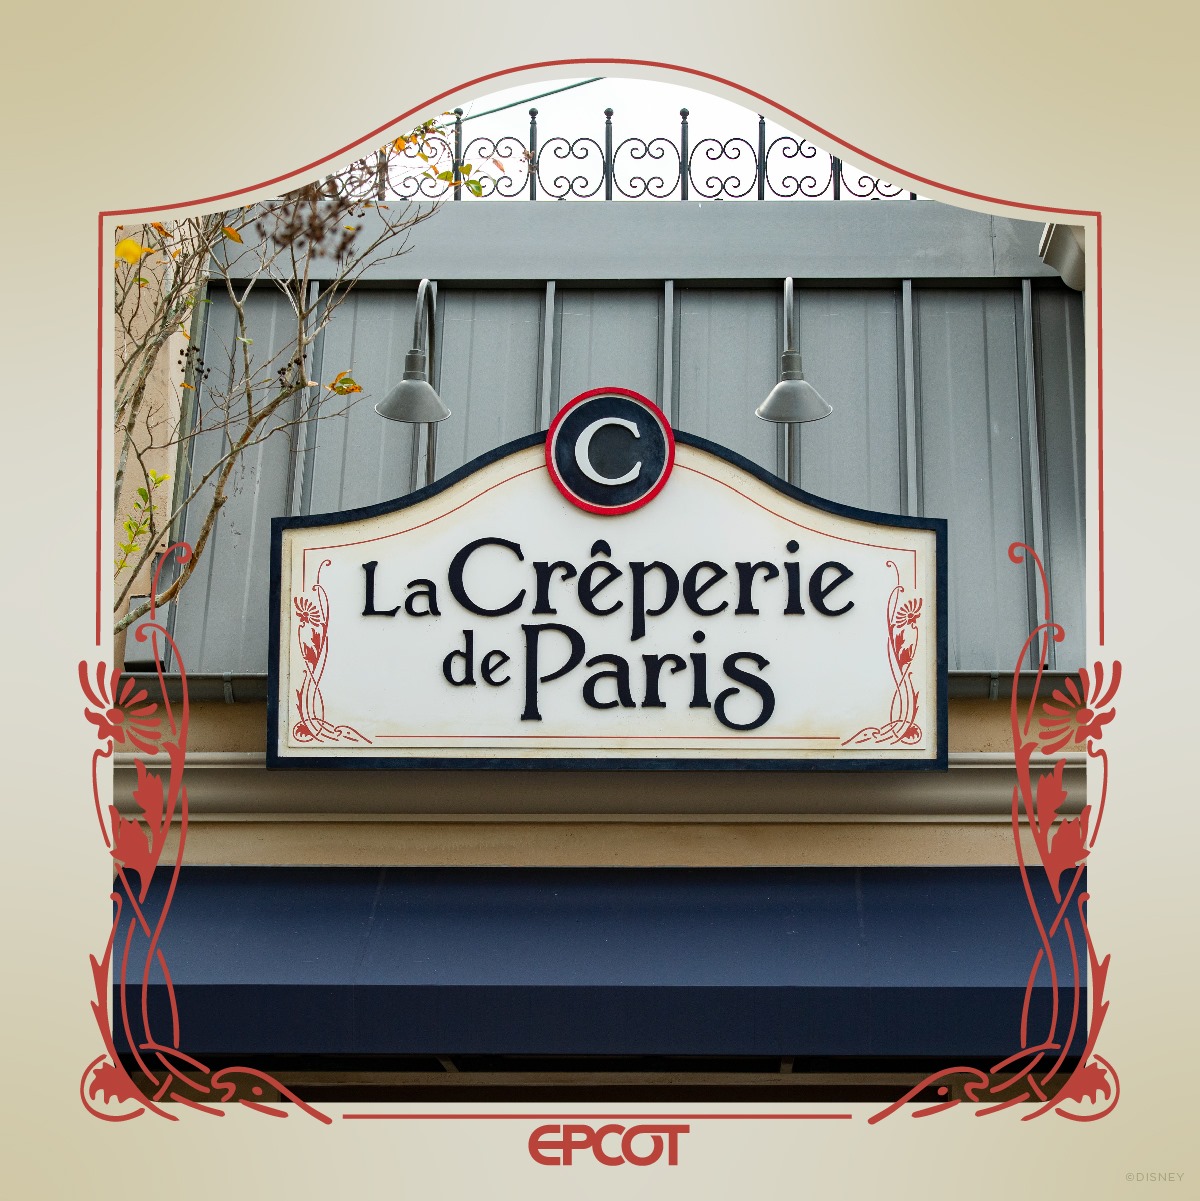 La Crêperie de Paris in the France Pavilion opening in October